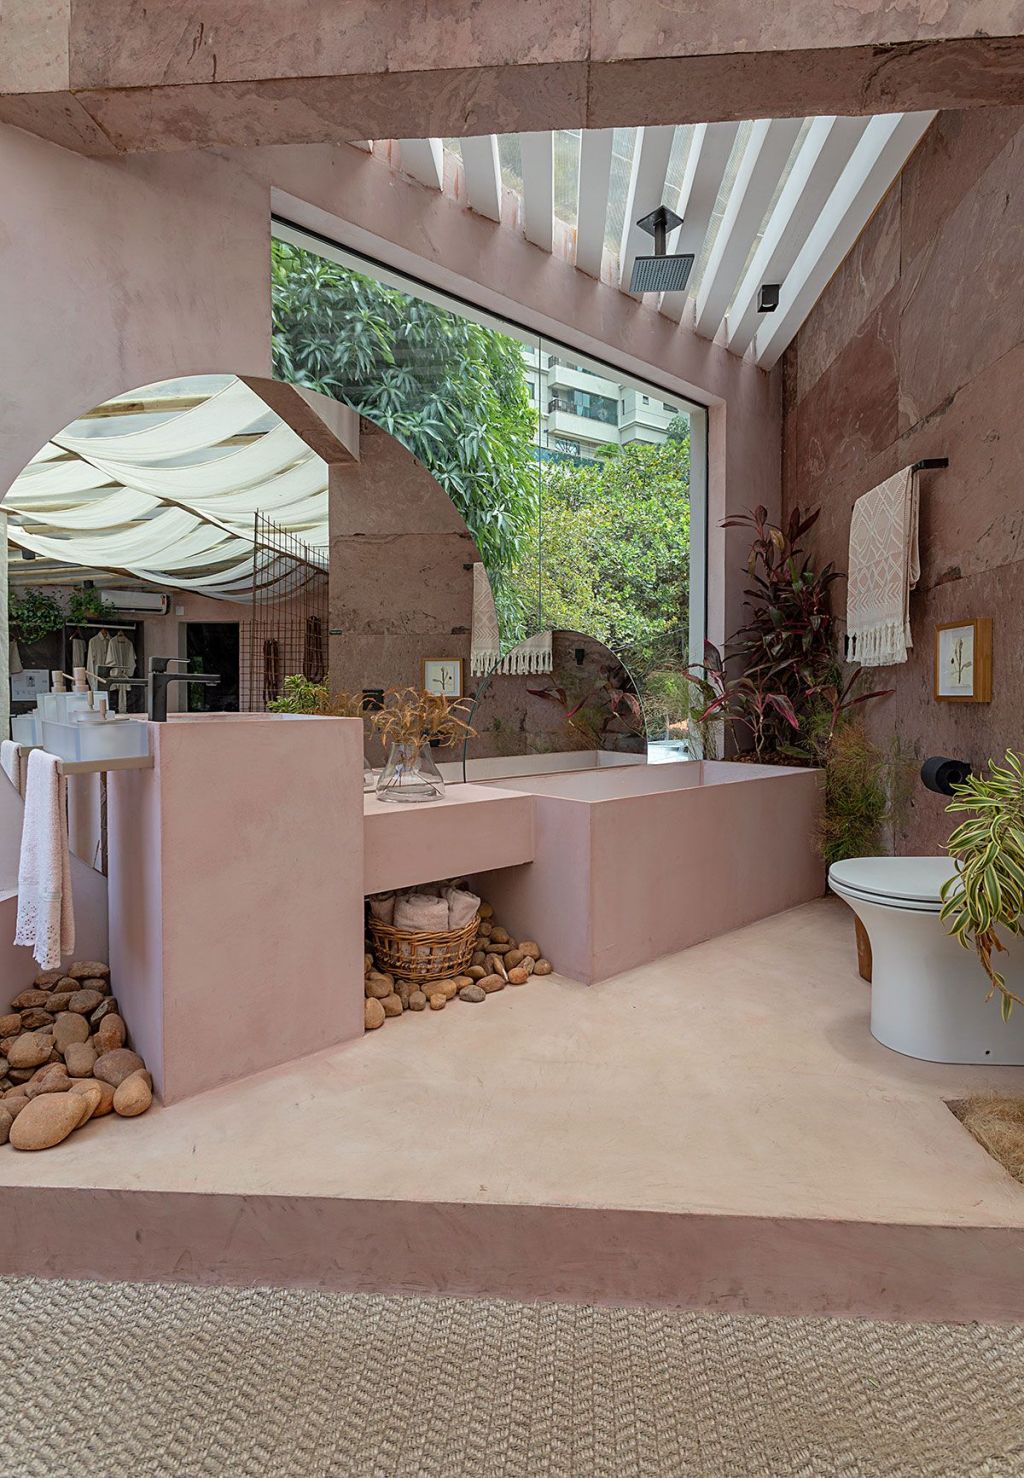 banheiro monocromatico jessica araujo casacor bahia 2019 colorido